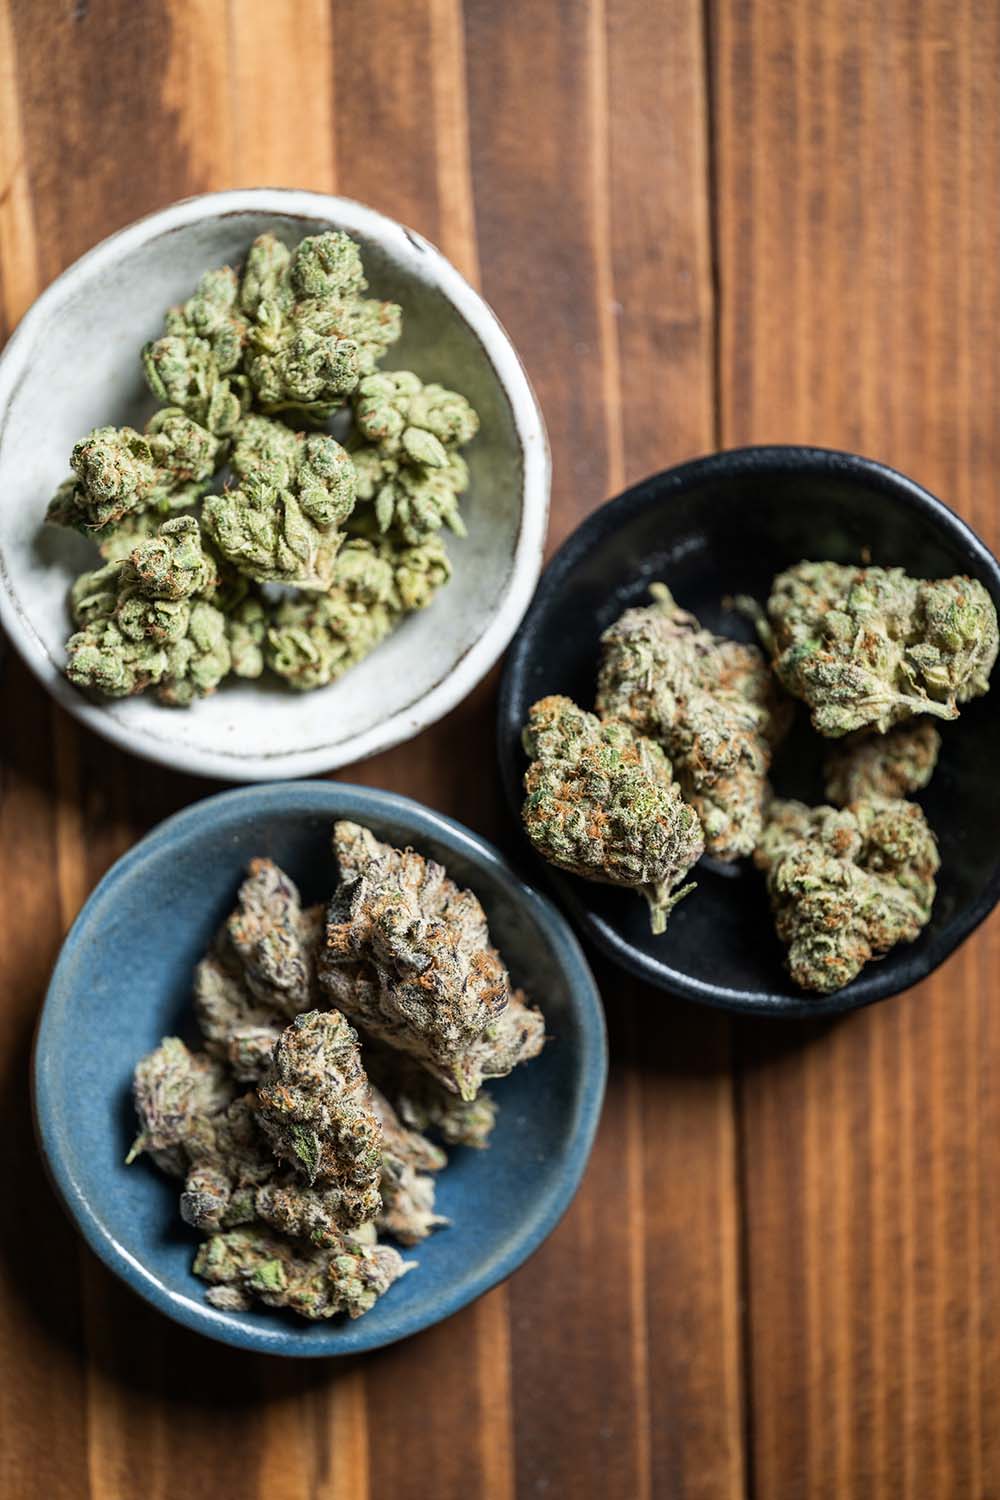 Three types of cannabis flower.